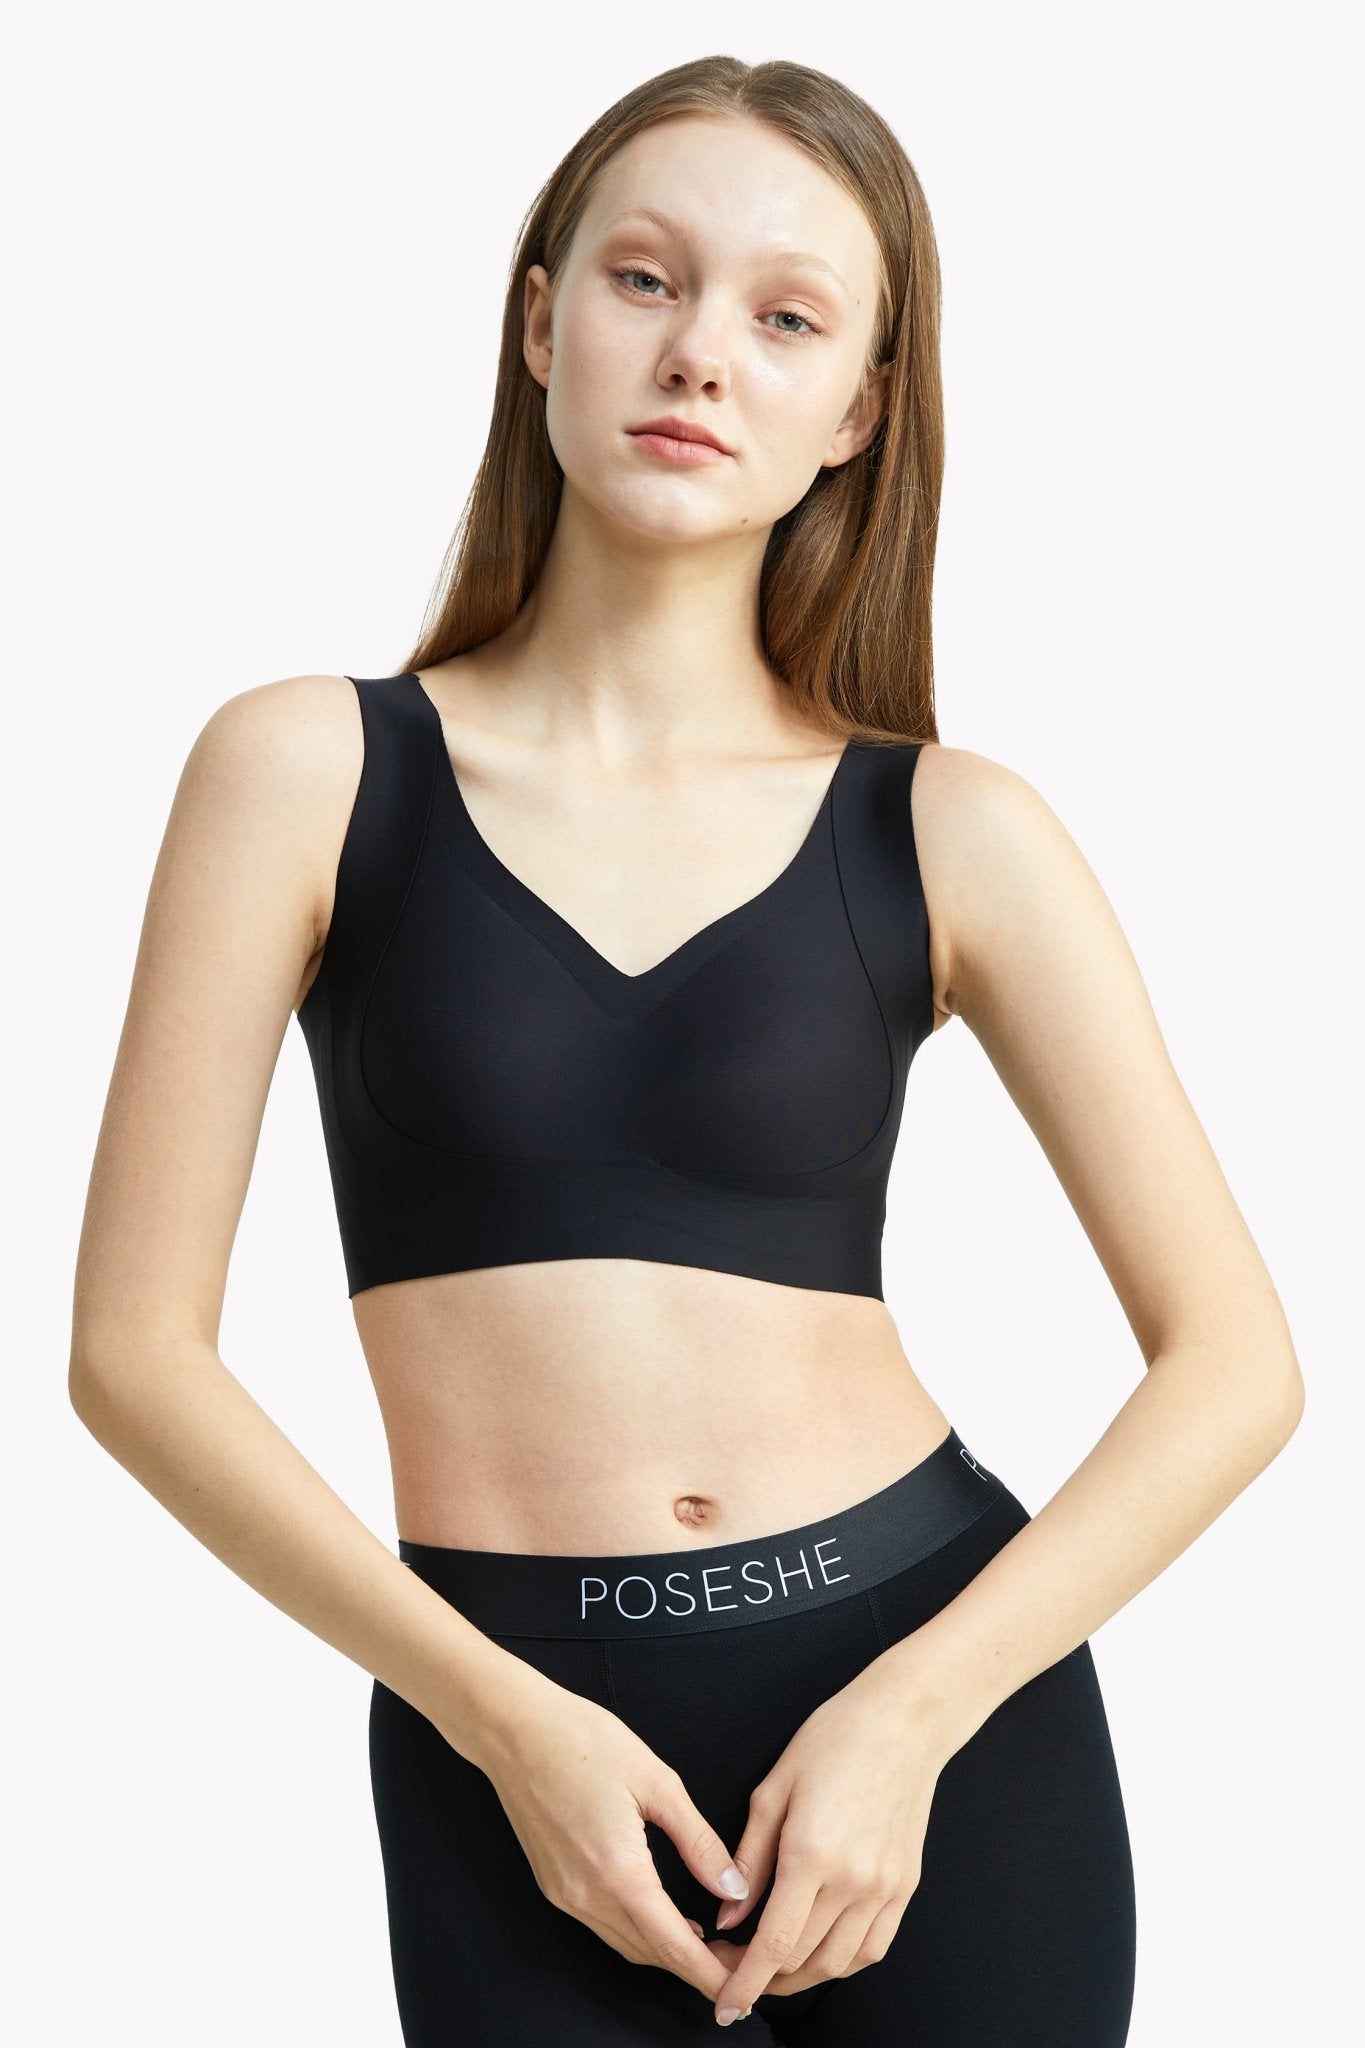 POSESHE Women's Modal Bras - Ultimate Comfort & Support